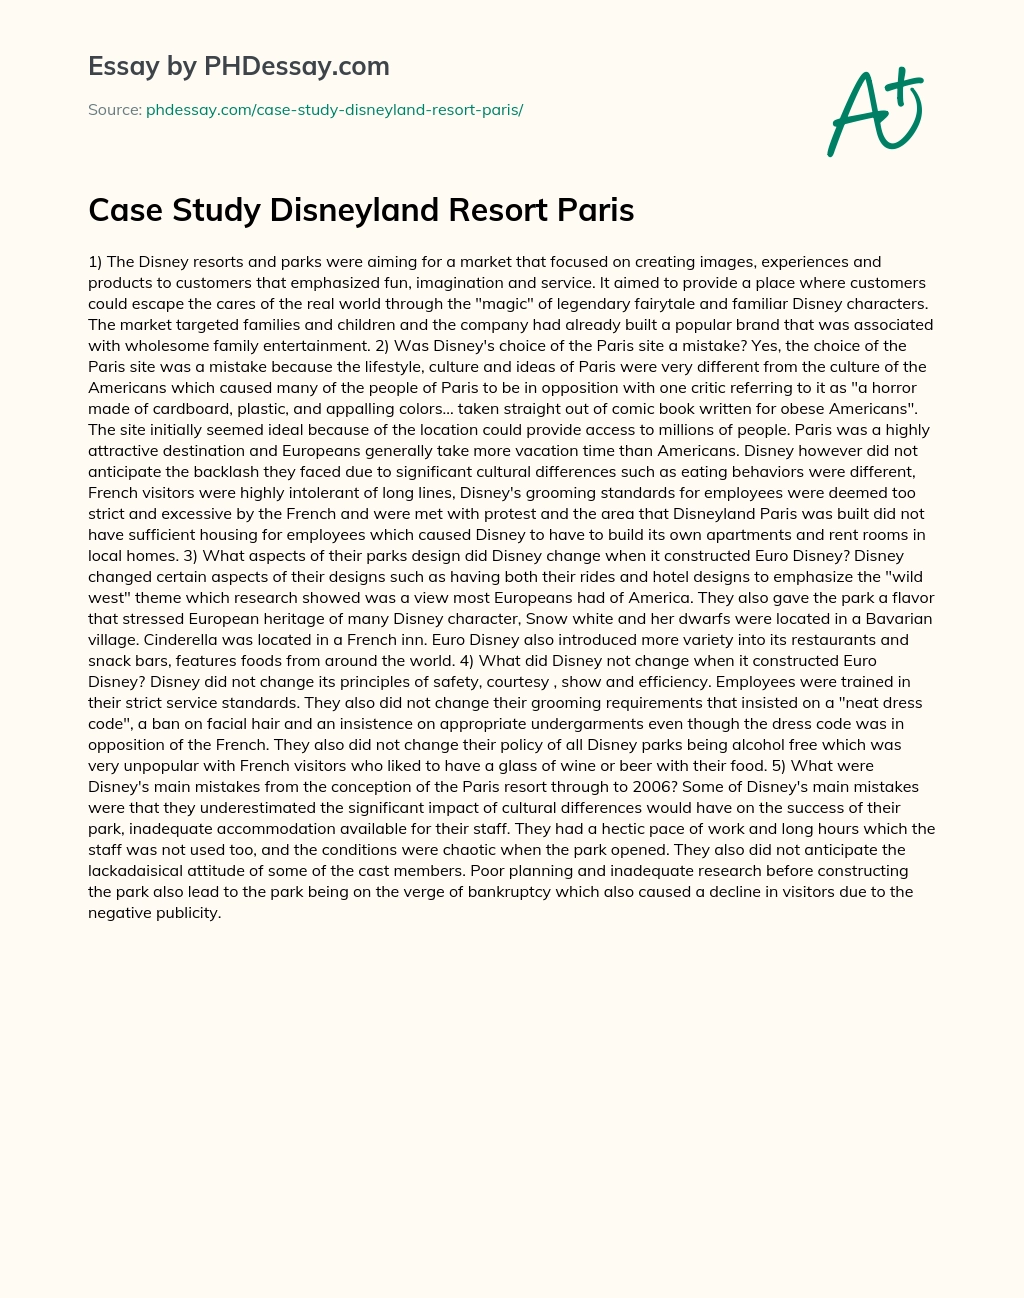 disneyland resort paris case study answers